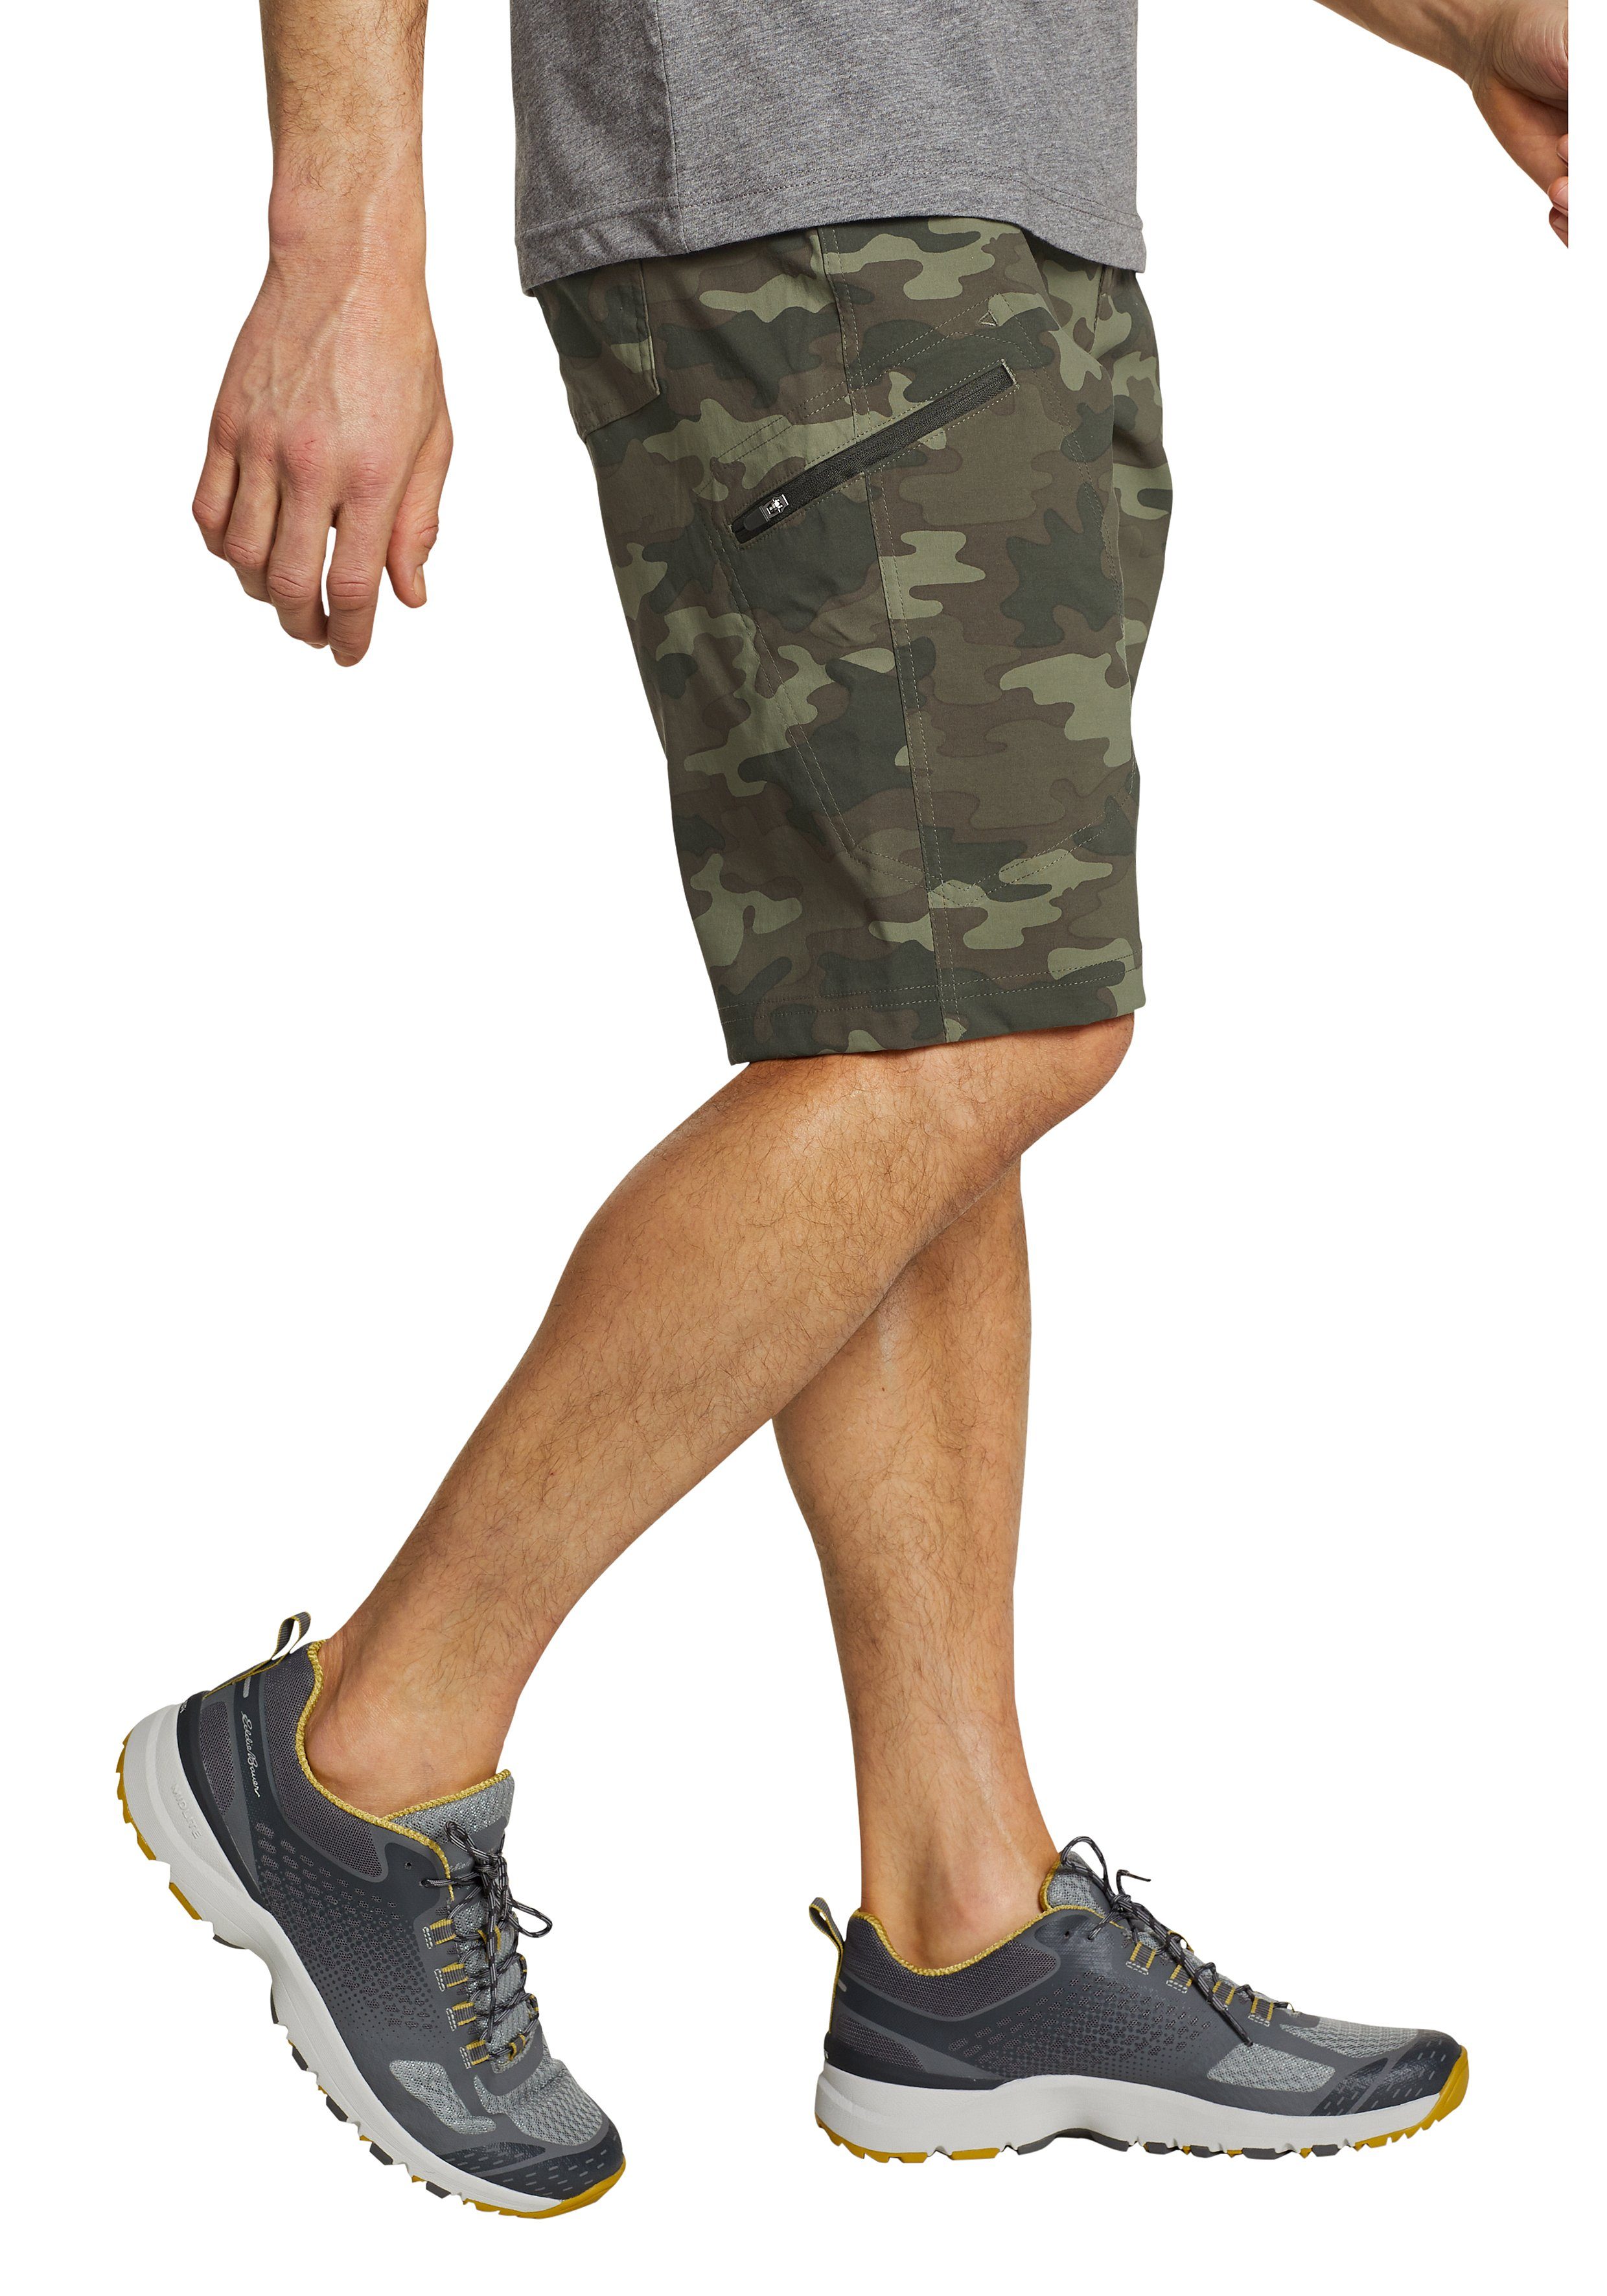 Pro Eddie Bauer Shorts Guide Shorts - gemustert Camouflage